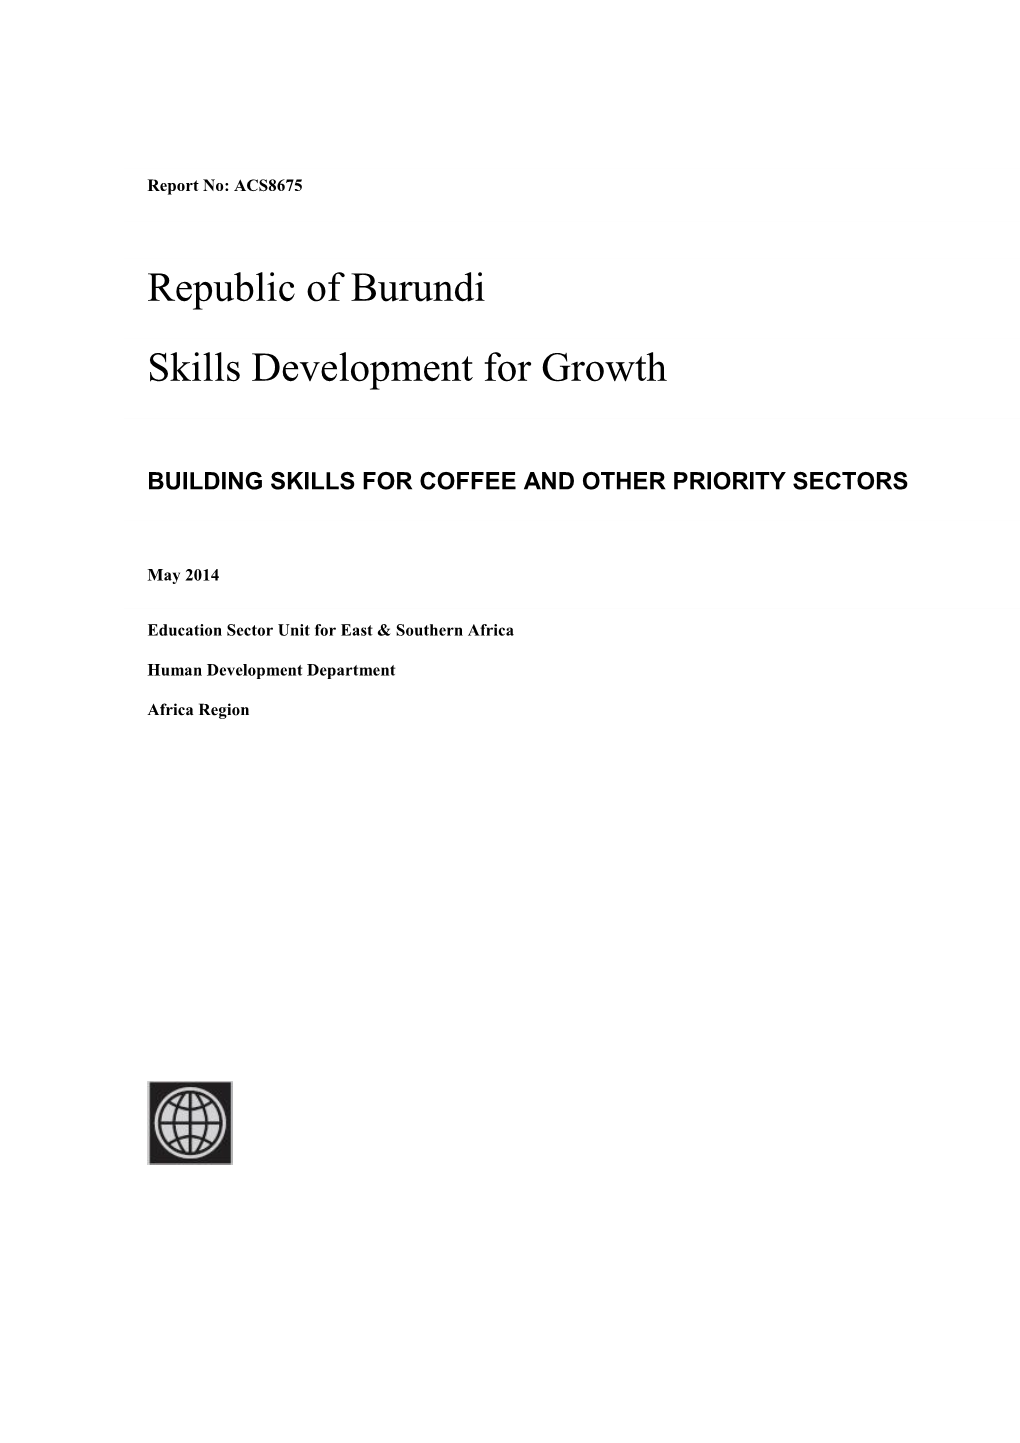 Republic of Burundi Skills Development for Growth